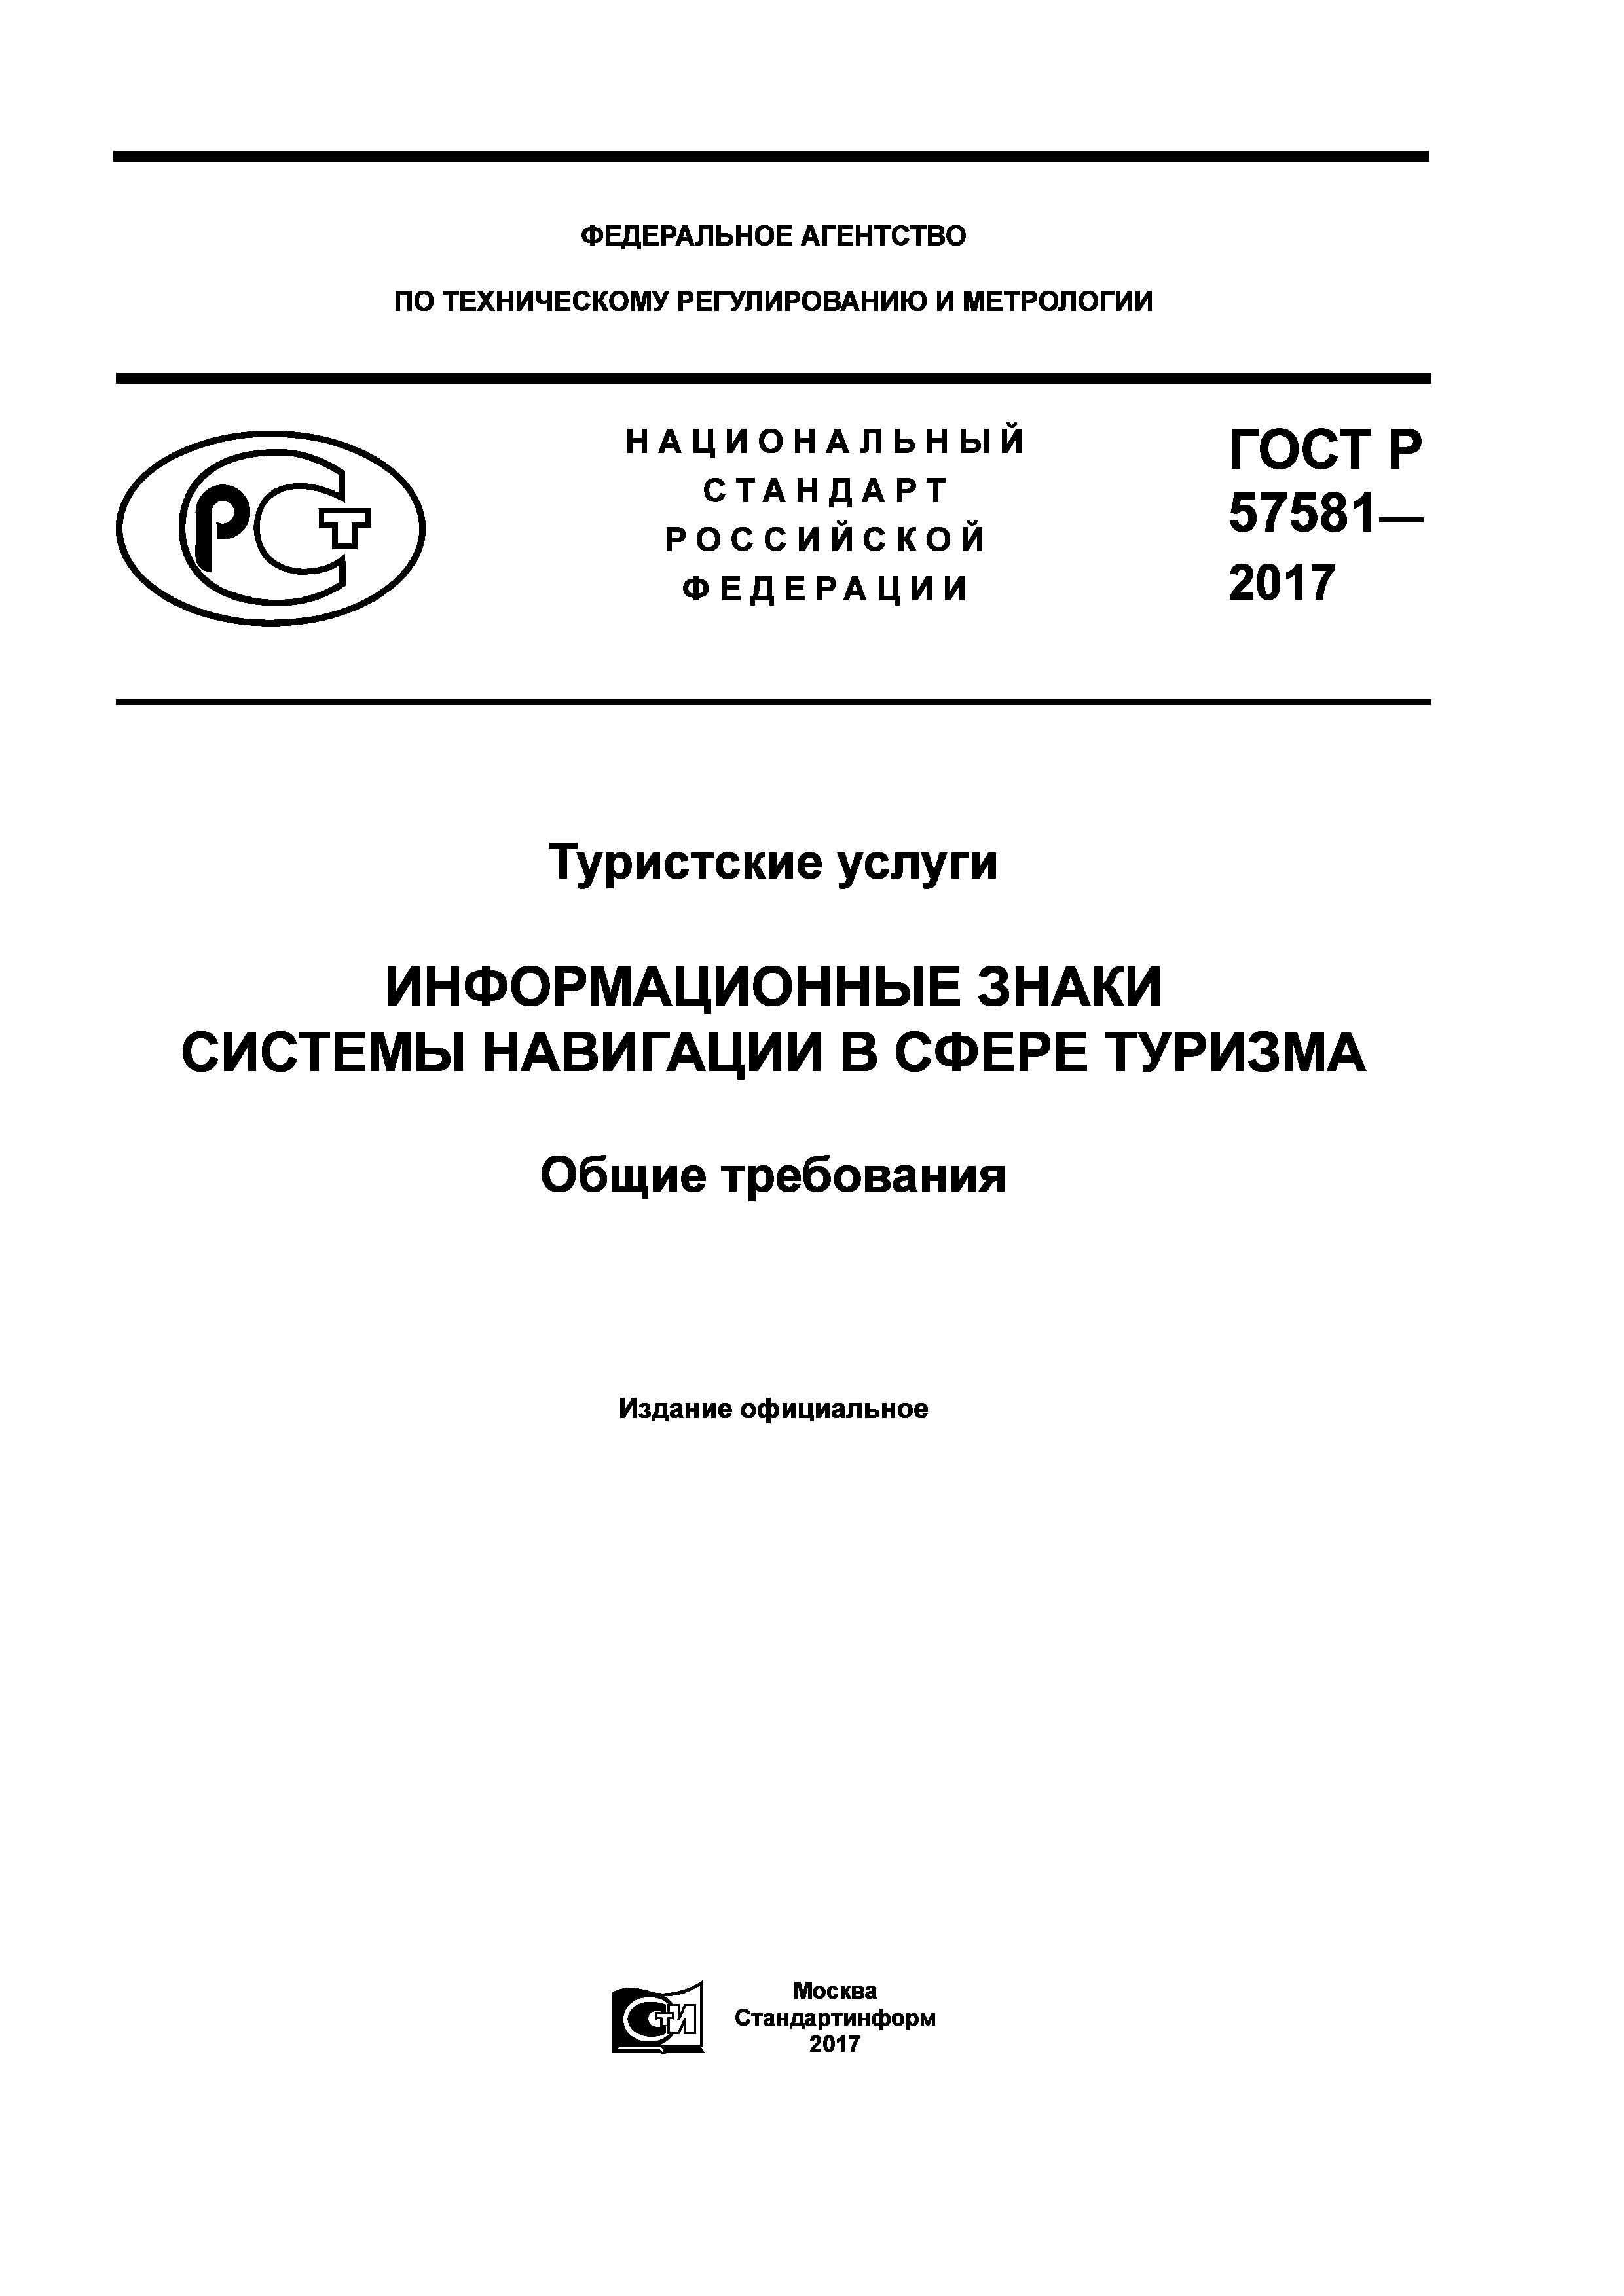 ГОСТ Р 57581-2017